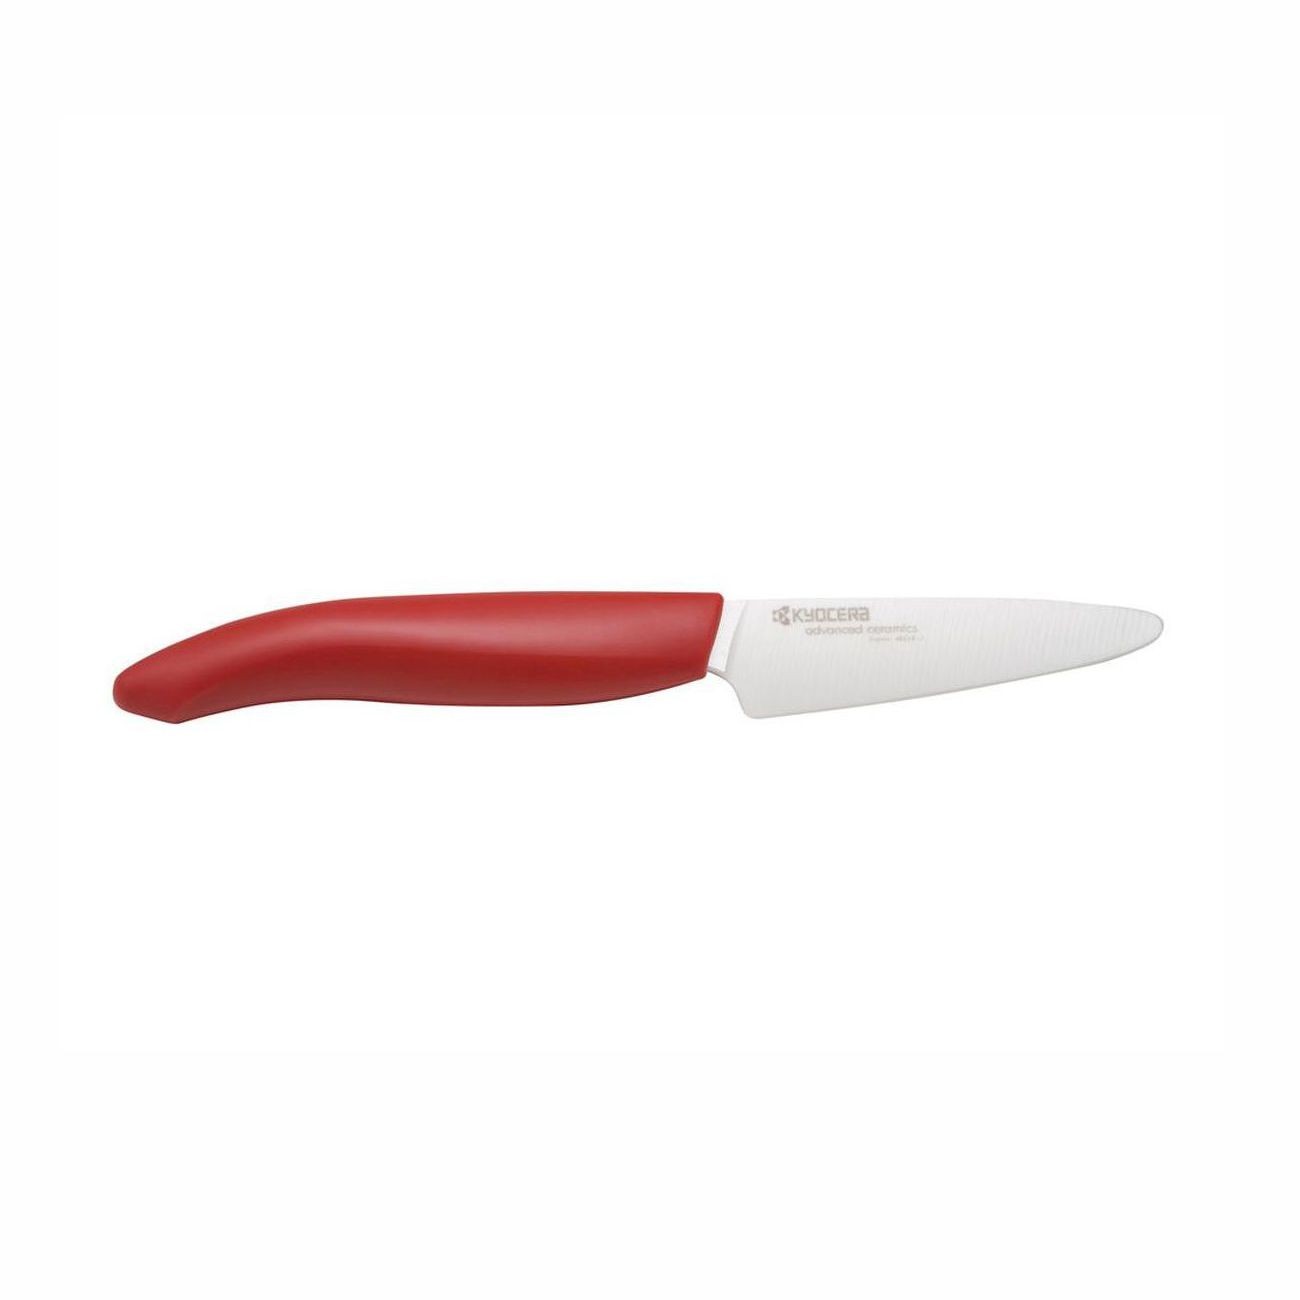 https://www.cuchilleriadelprofesional.com/2544/kyocera-fk-075wh-rd-ceramic-paring-knife-75-mm-red-handle.jpg